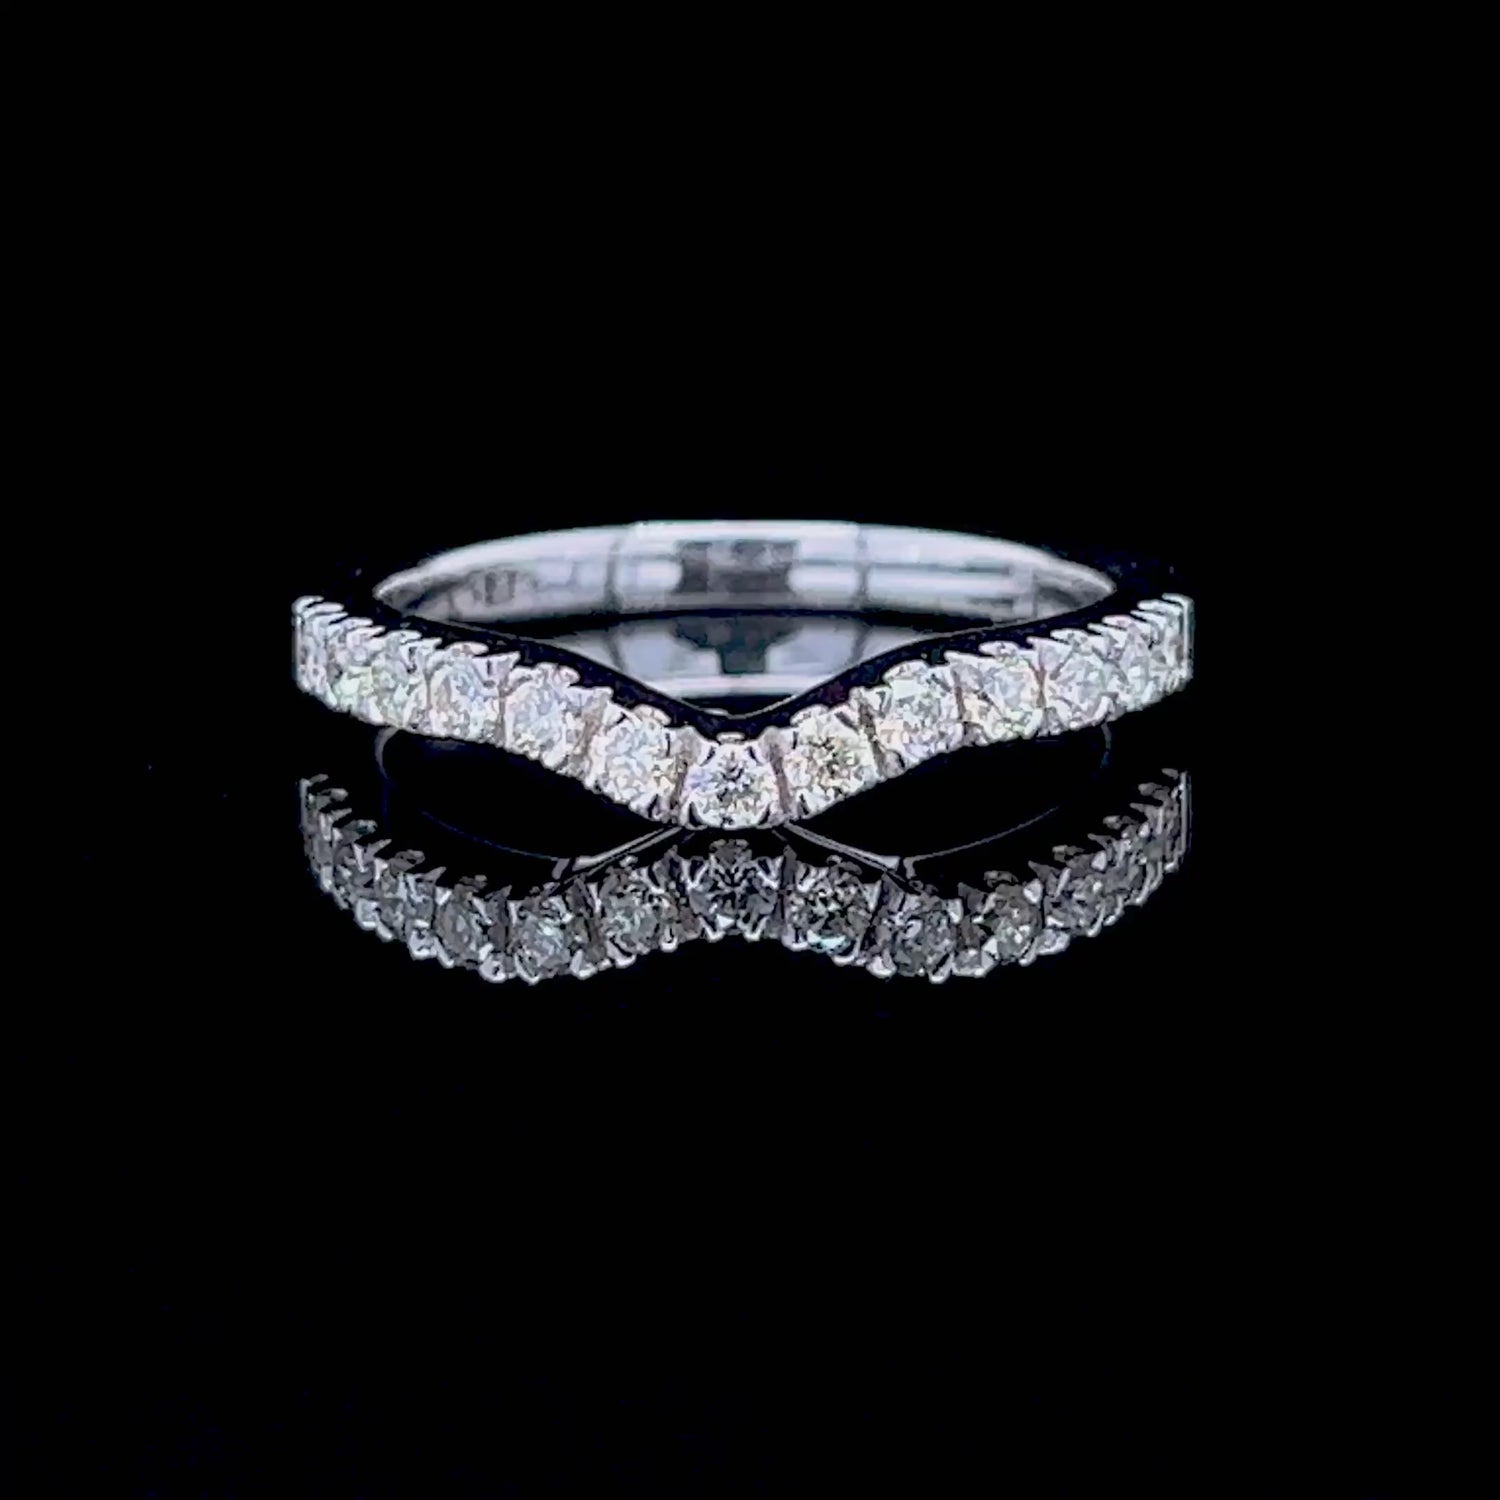 Bargain 0.50CT Round Cut Diamond Wedding Ring in 14KT White Gold